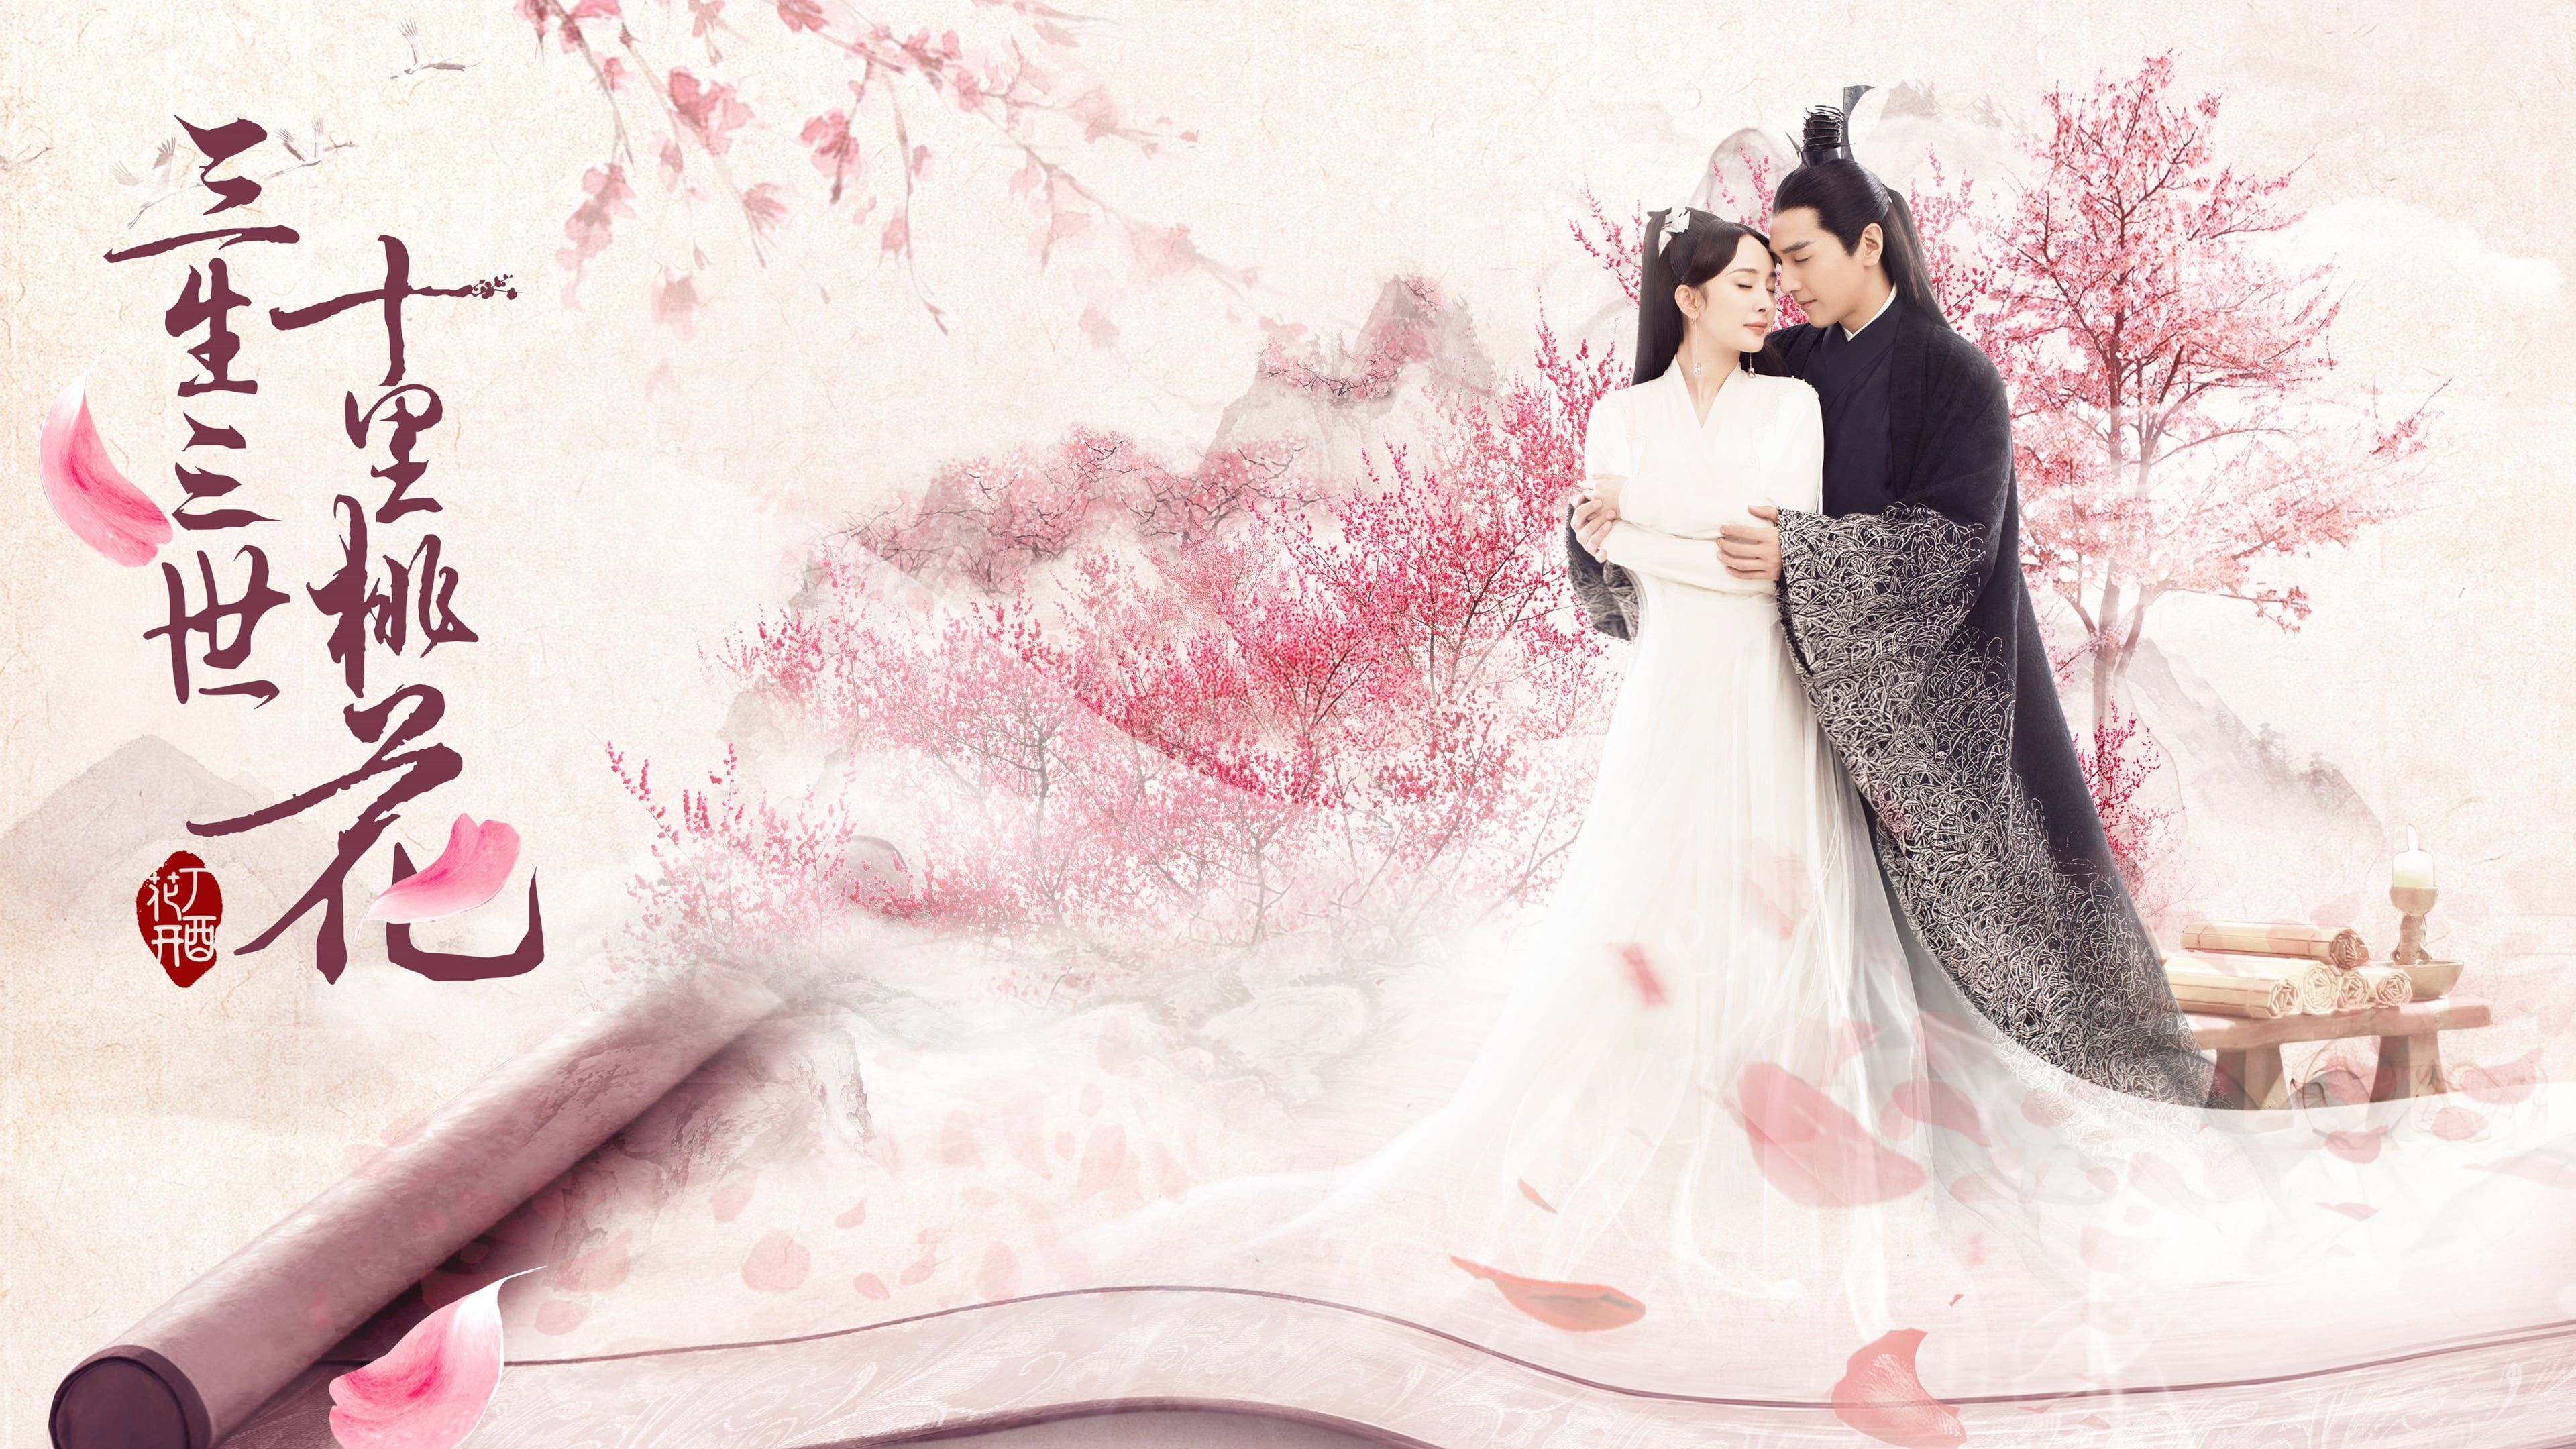 Ten Miles of Peach Blossoms (Eternal Love) is a beautiful love story of two deities Ye Hua (portrayed by Mark Ch. Eternal love drama, Peach blossoms, Eternal love